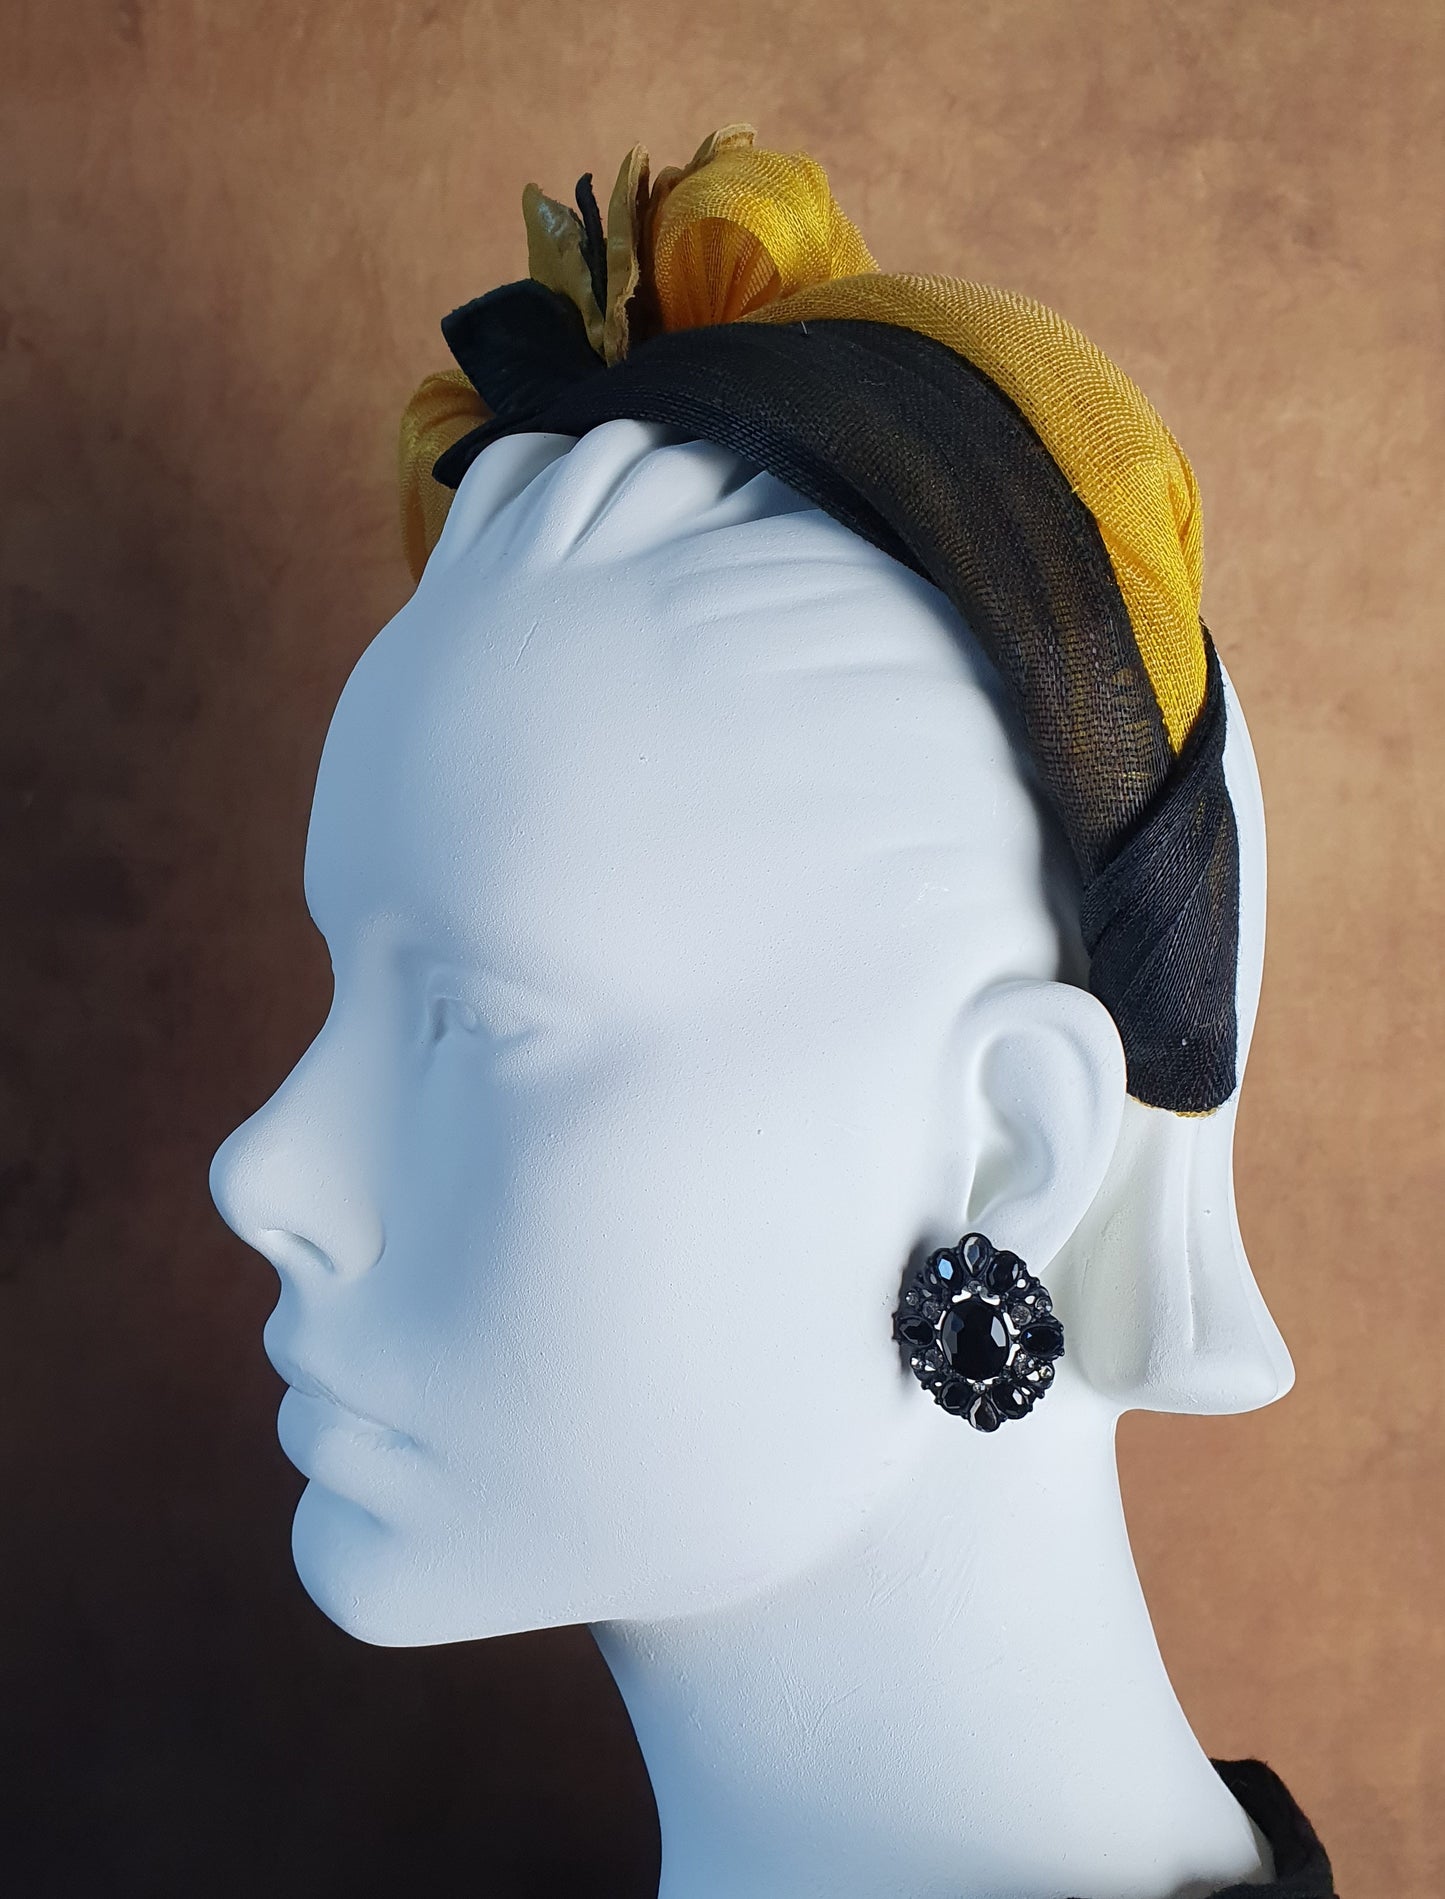 Handmade yellow and black abaca silk headband, fascinator, tiara, guest headband, bridal headband, special occasion